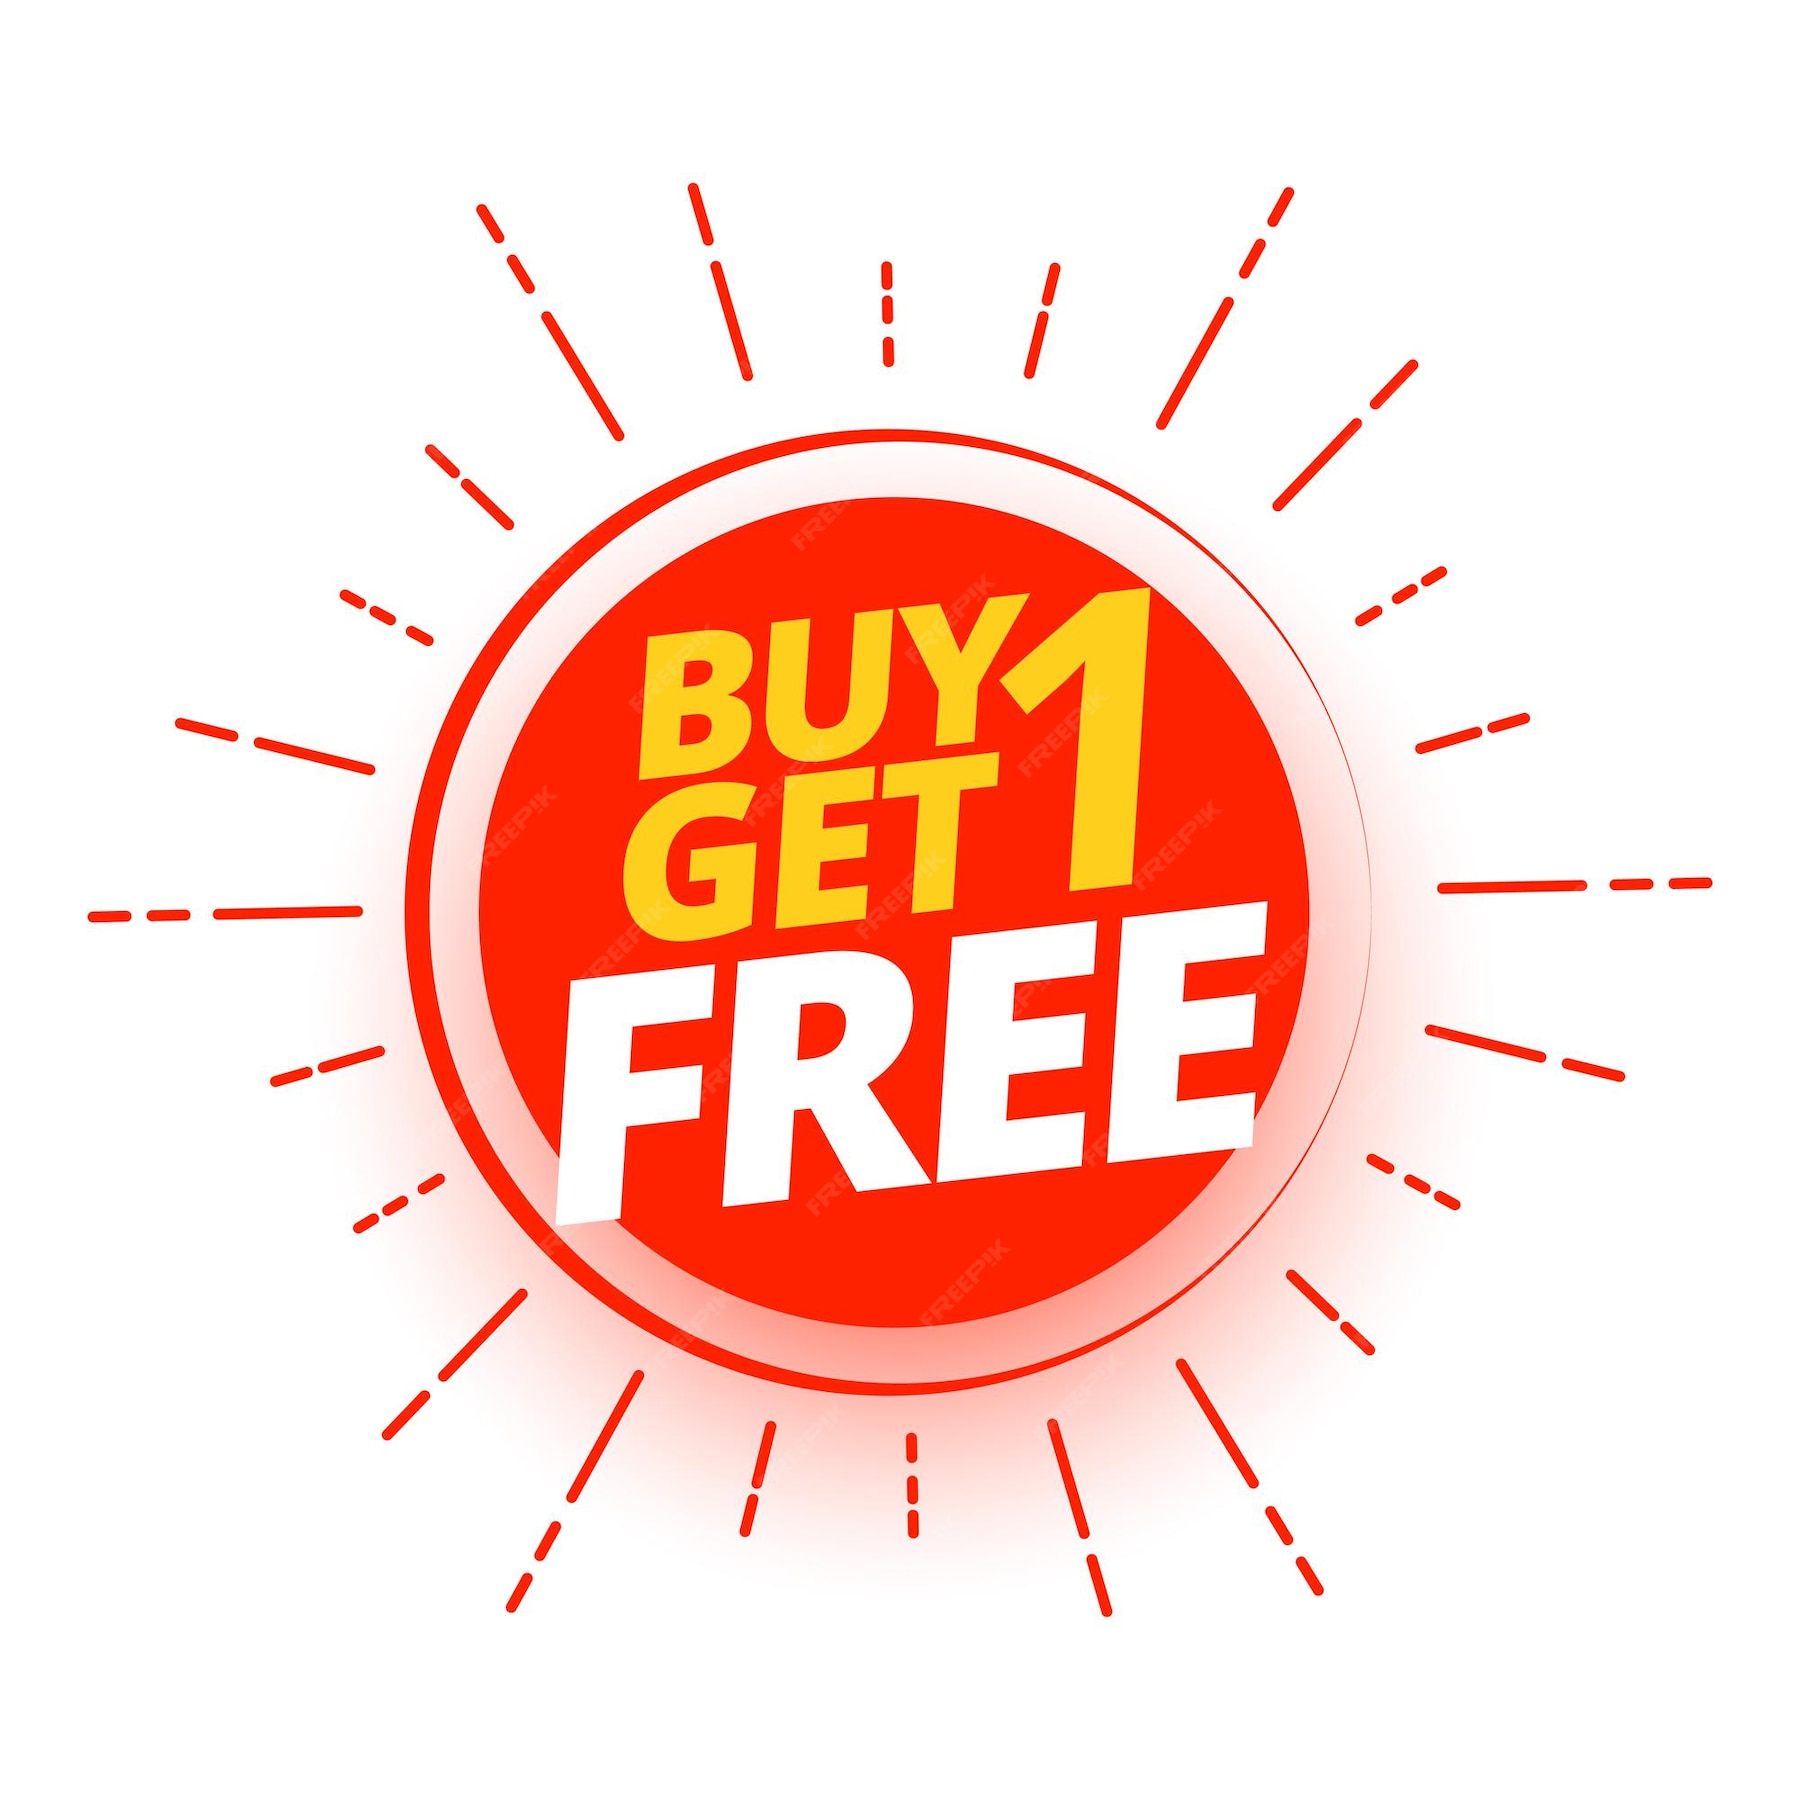 buy-one-get-one-free-shopping-offer-design_1017-34223.jpg